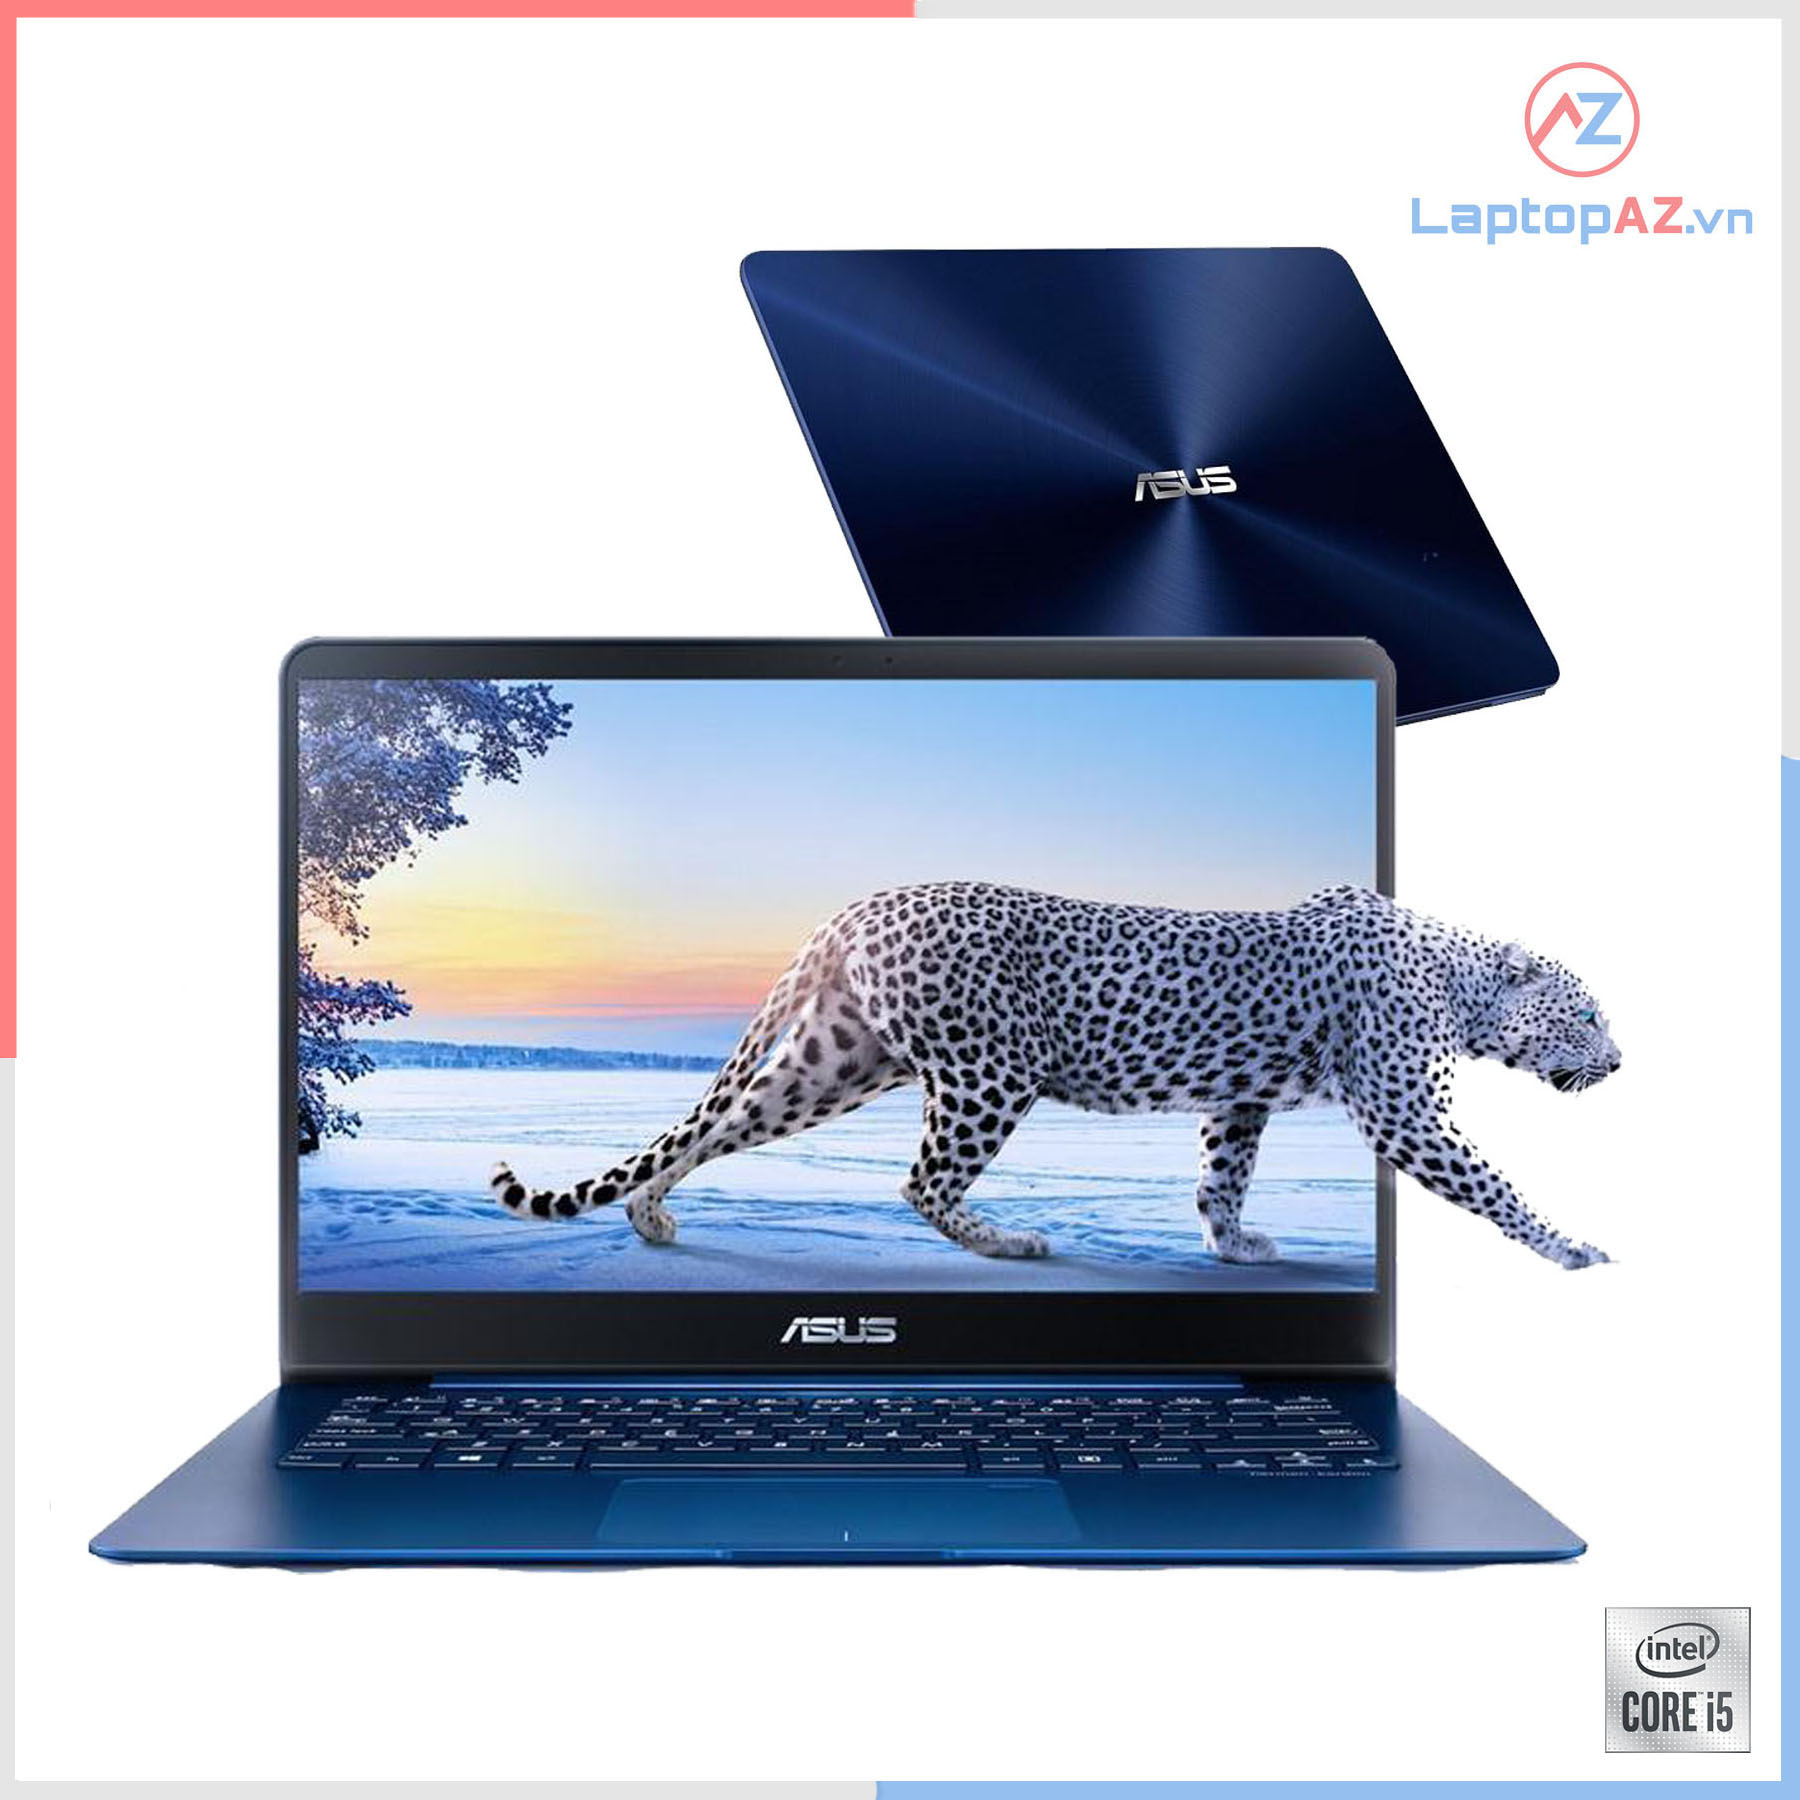 Laptop cũ Asus ZenBook UX430UA (Core i5- 7200U, 8GB, 256GB, VGA Intel HD 620, 14.0 inch FHD IPS)